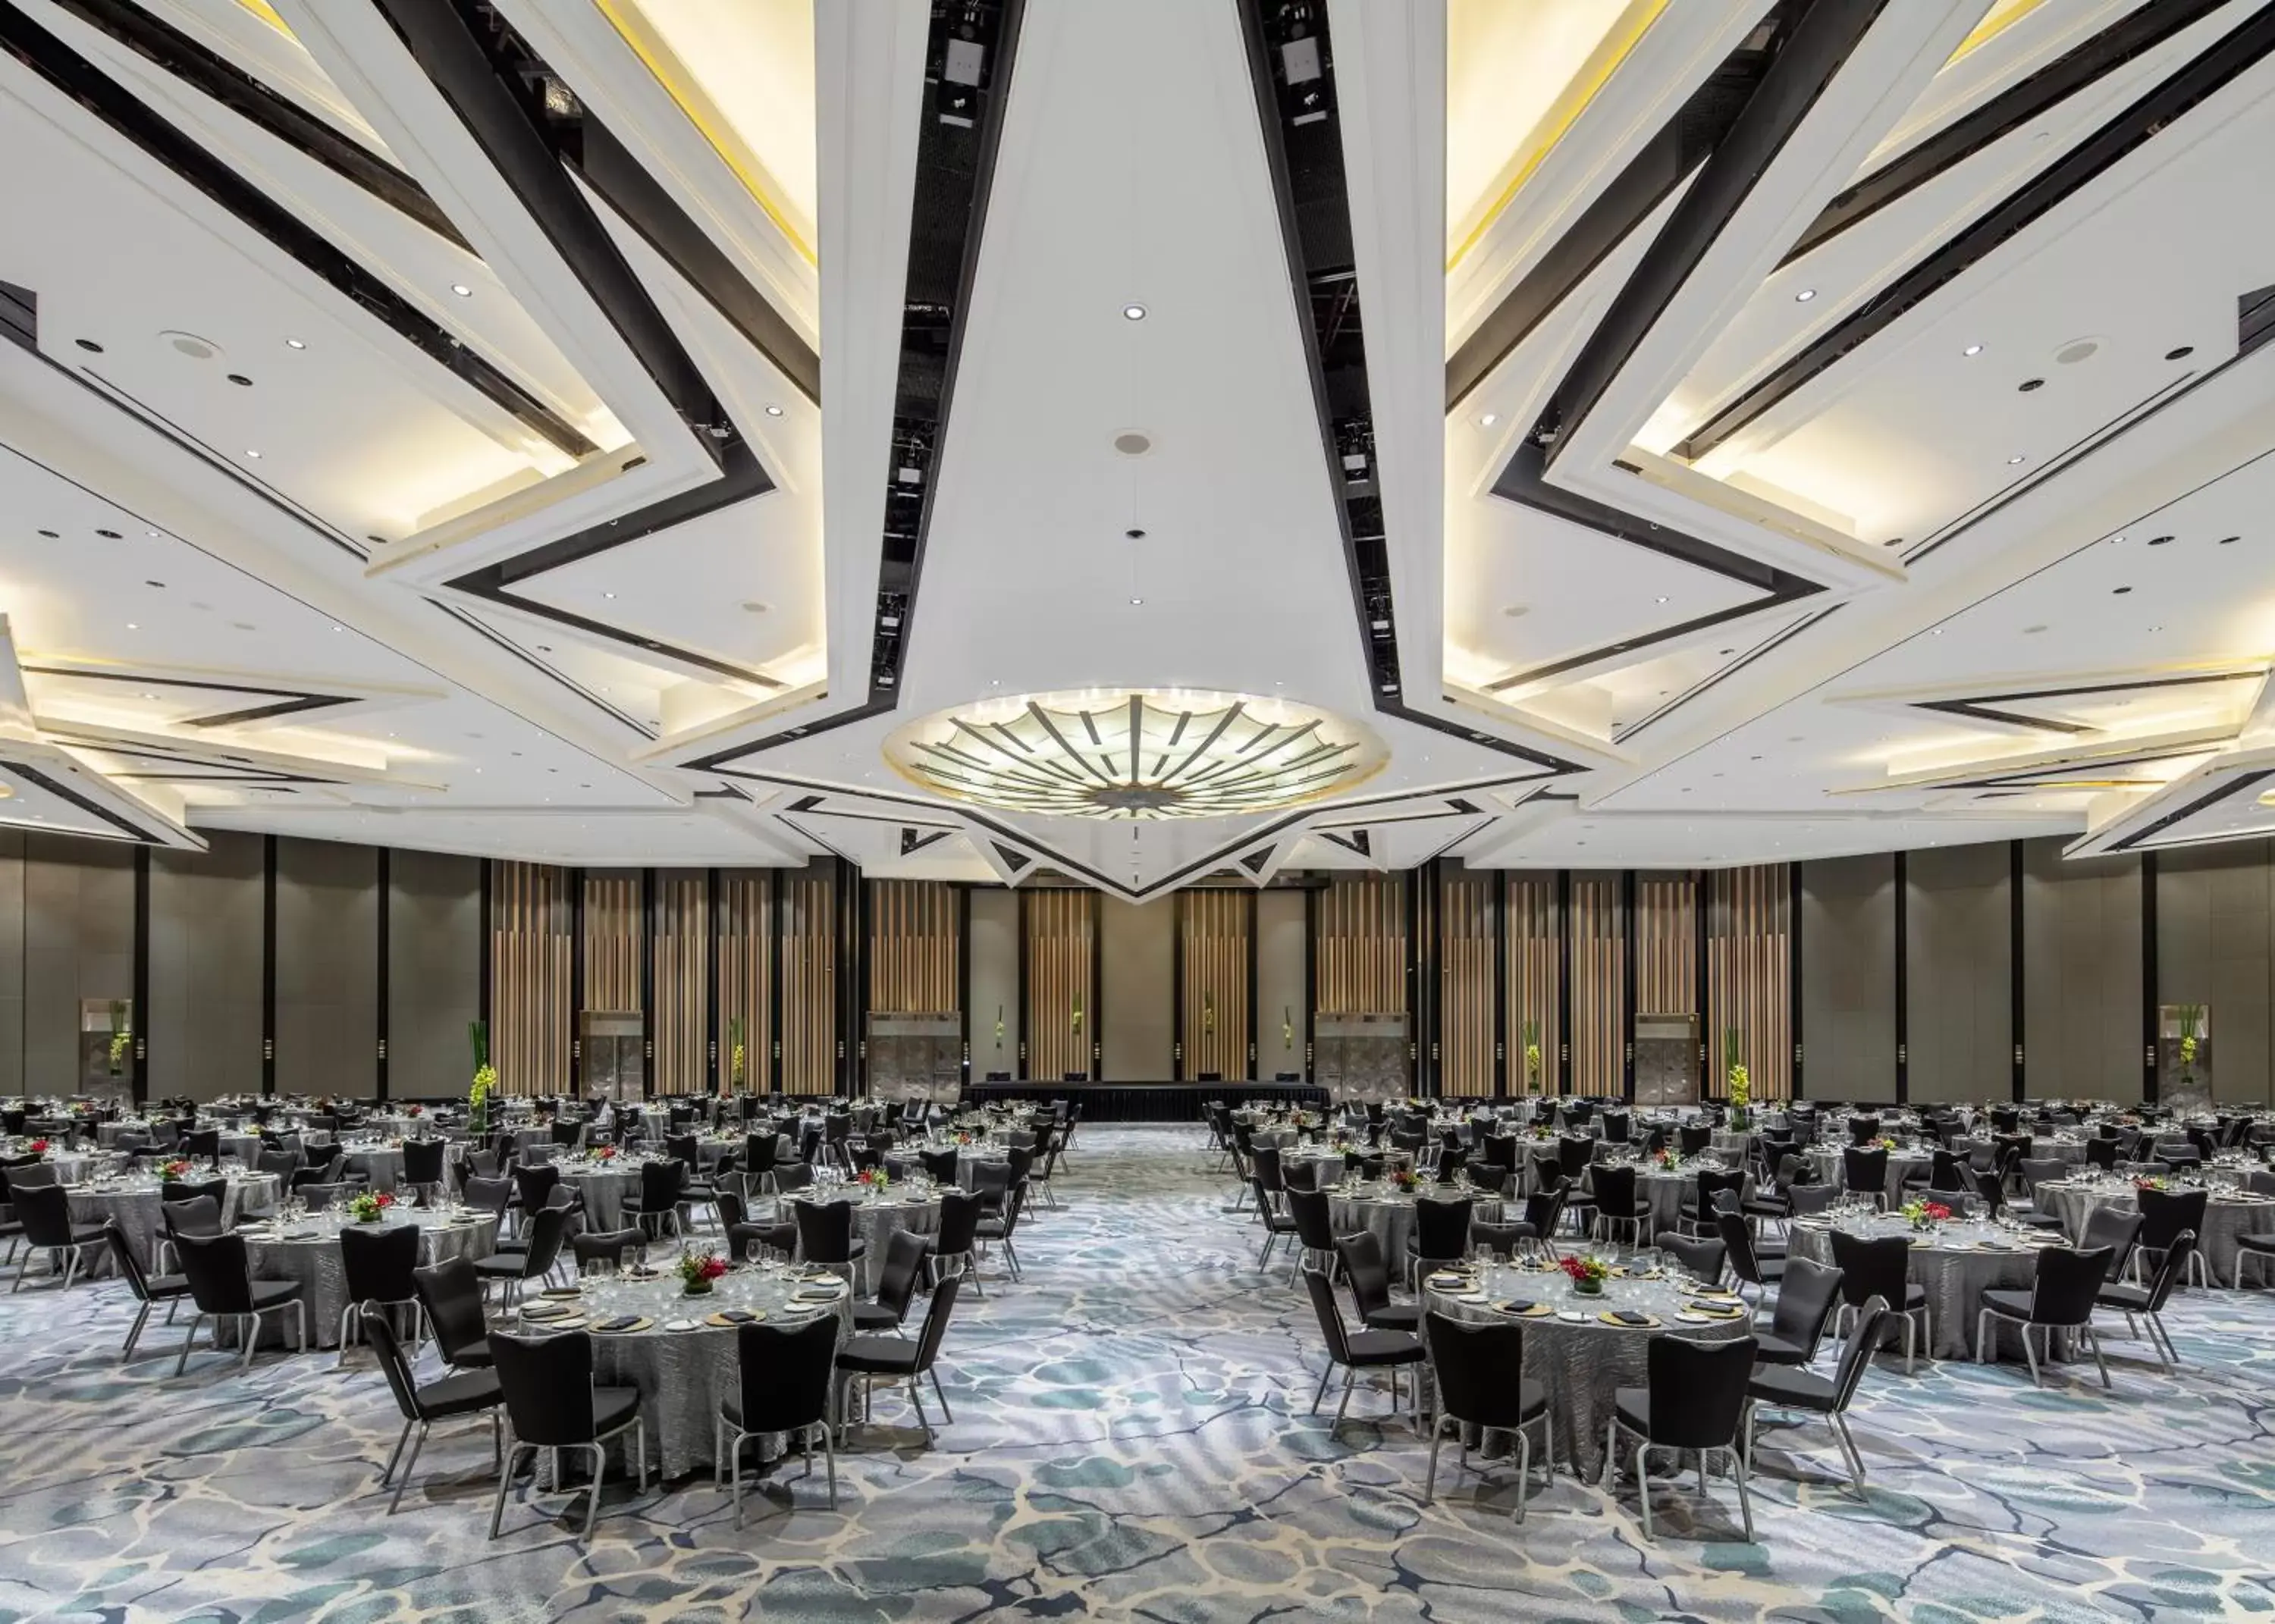 Banquet/Function facilities, Banquet Facilities in Fairmont Singapore